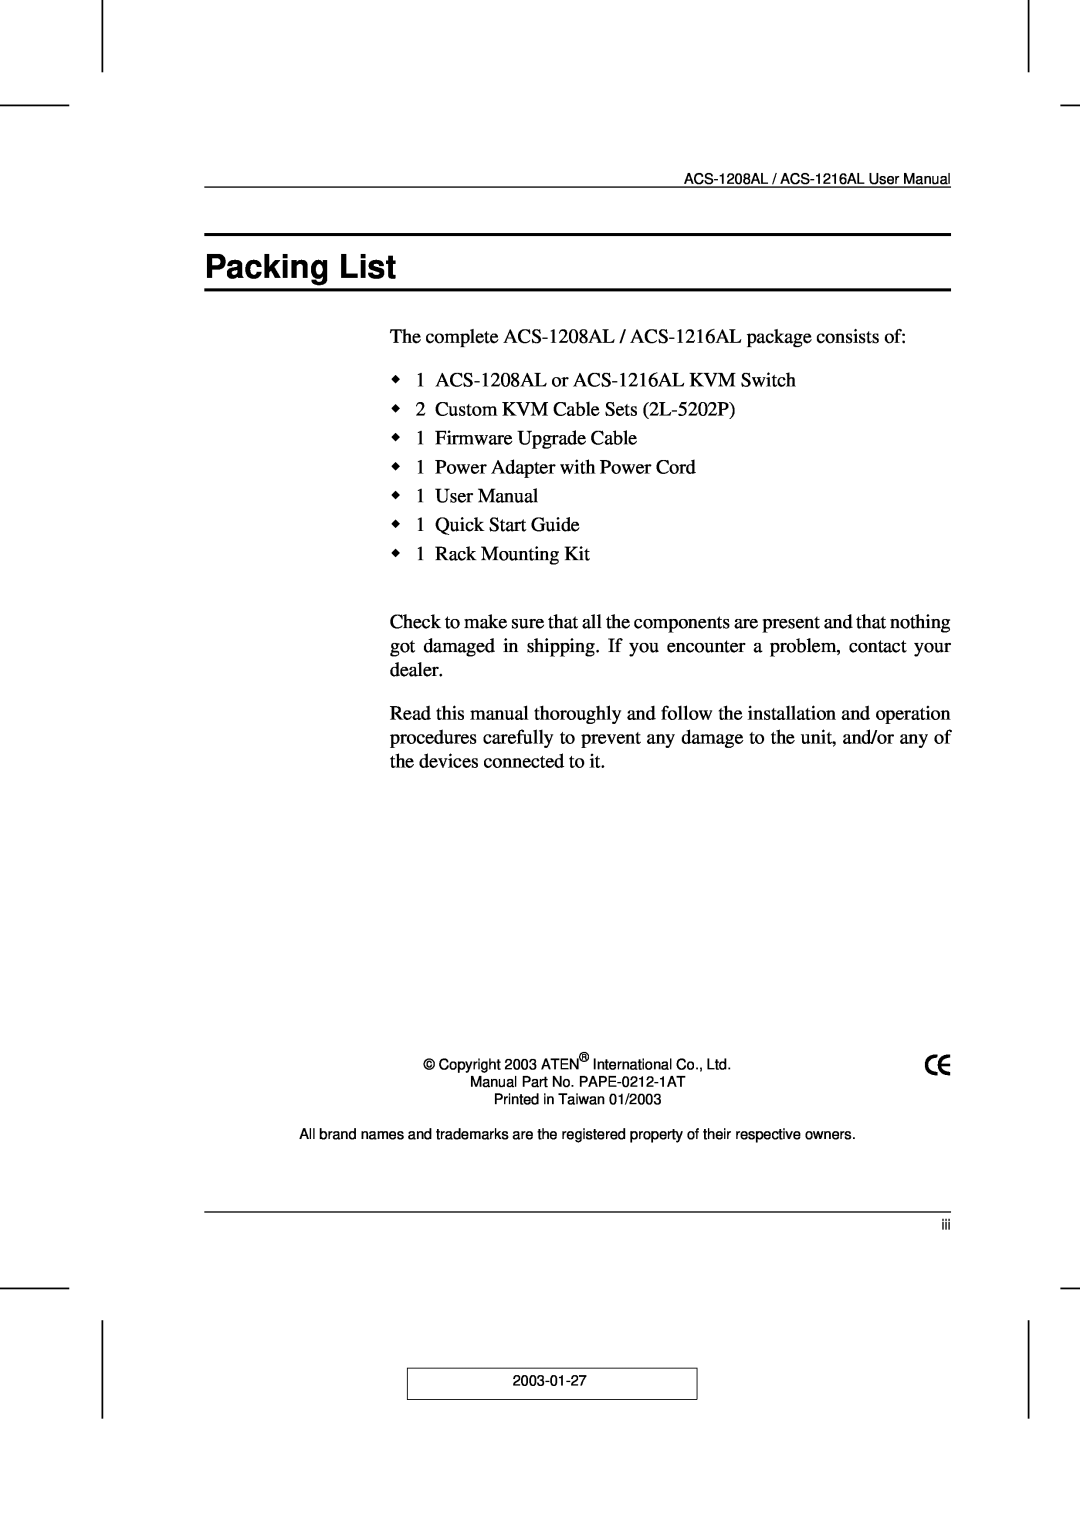 ATEN Technology ACS-1216AL, ACS-1208AL user manual Packing List 